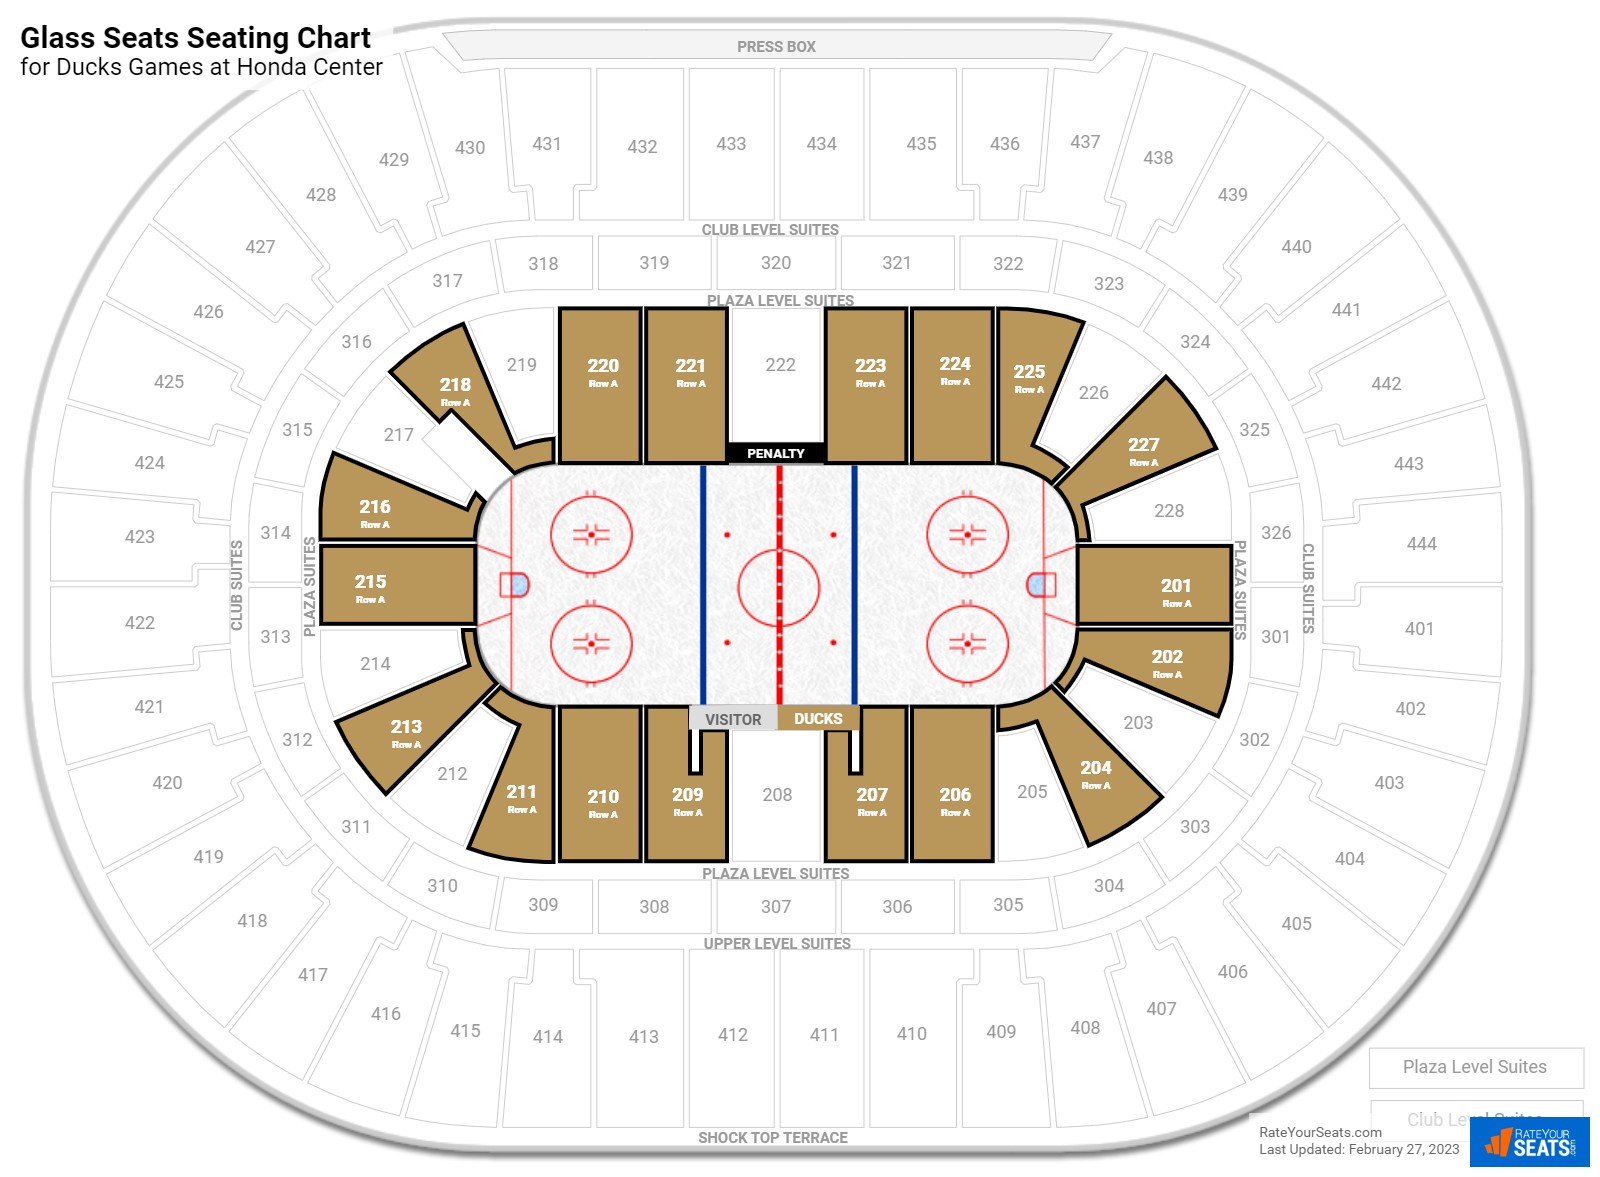 Ducks Glass Seats Seating Chart at Honda Center